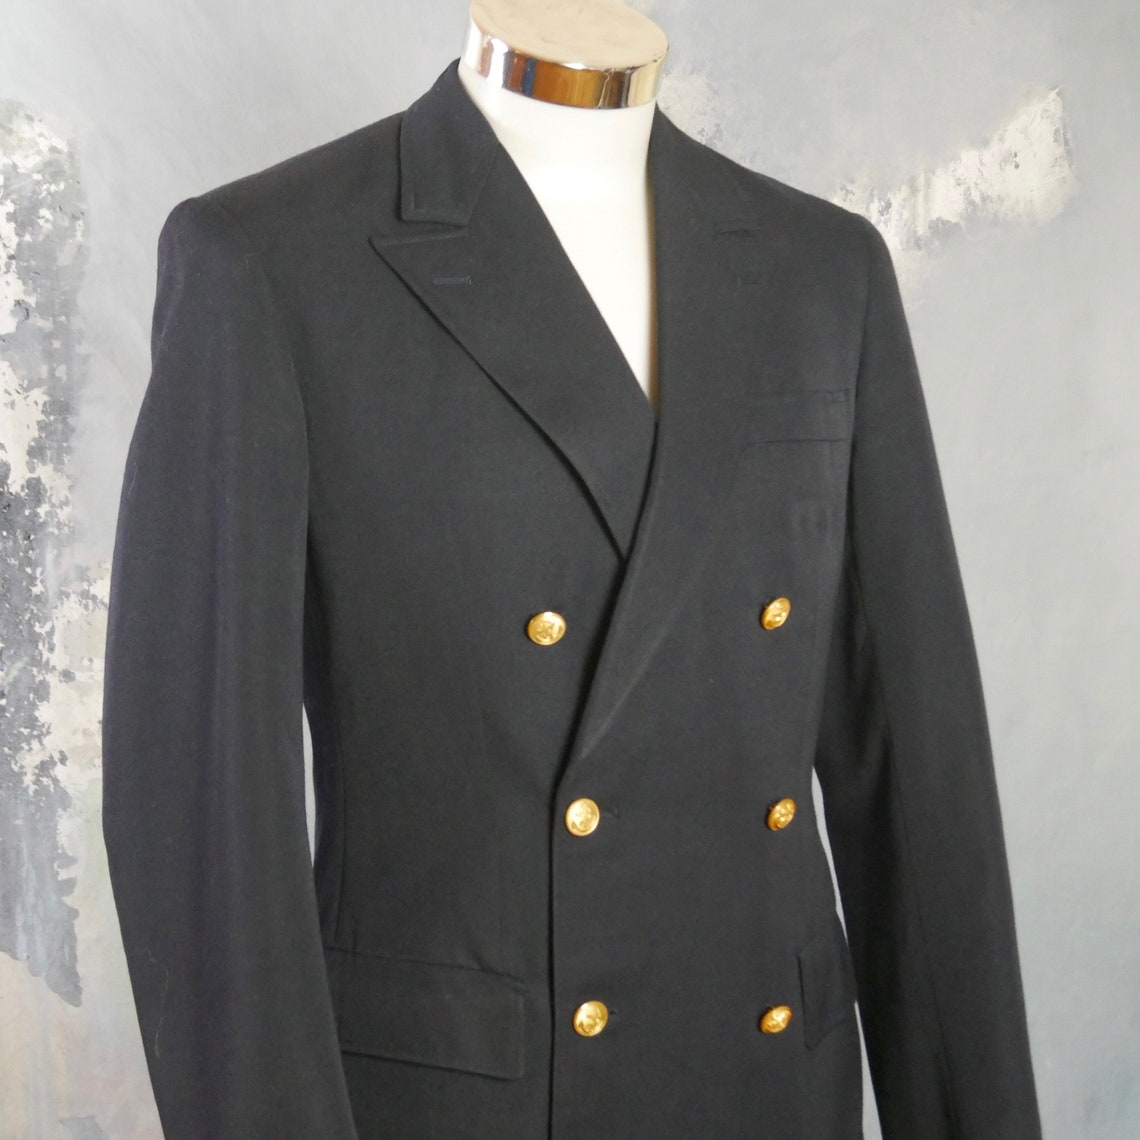 1960s German Navy Jacket Vintage Military Naval Officer's - Etsy